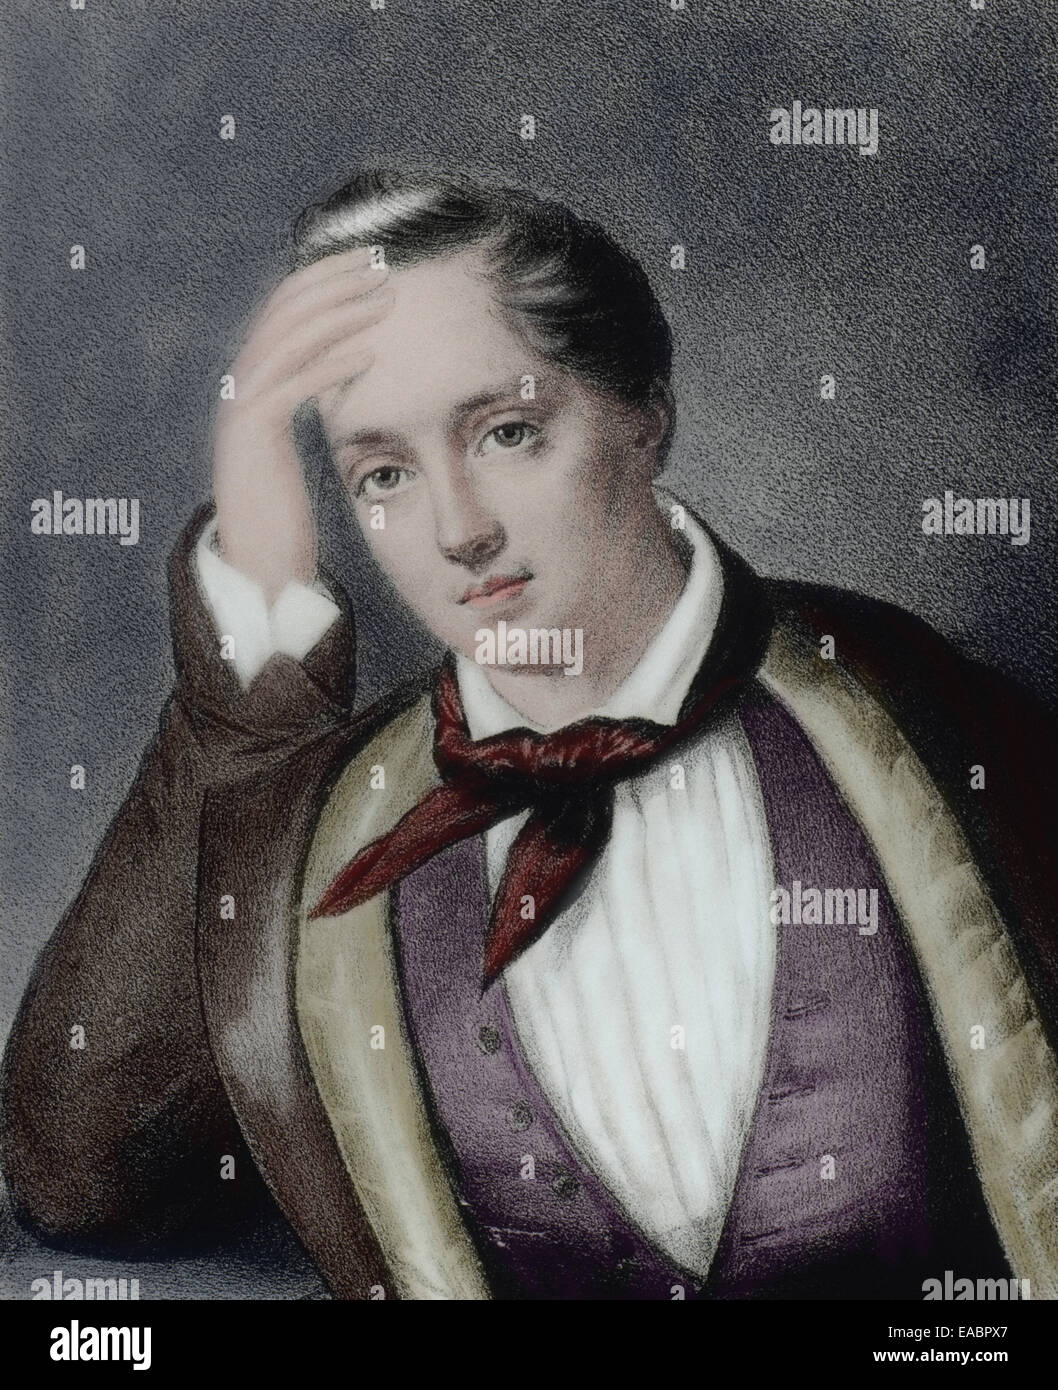 Yevgeny Baratynsky (1800-1844). Russian poet. Romanticism style. Portrait. Engraving. Colored. Stock Photo